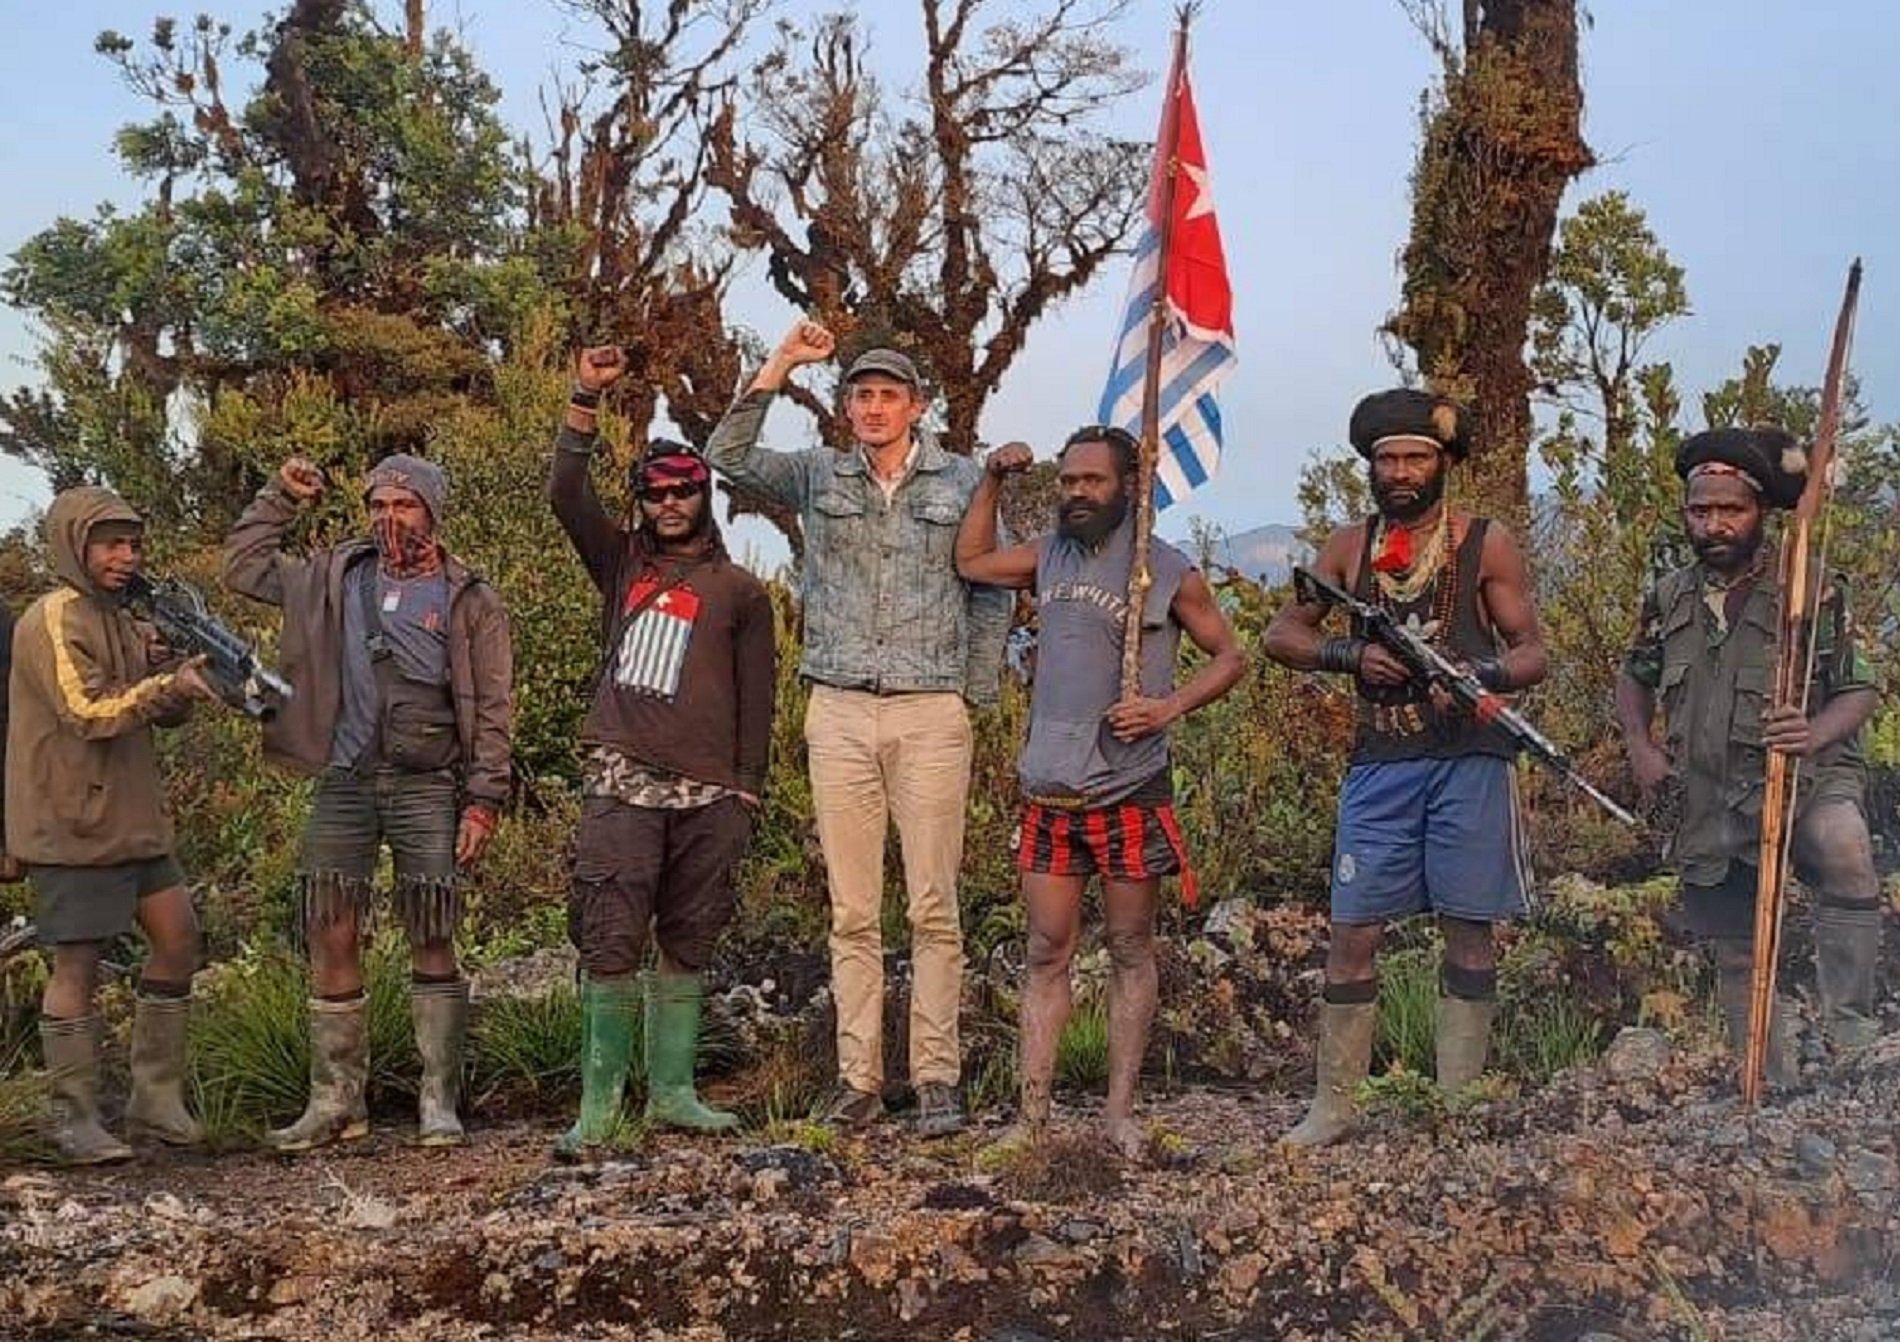 Capturen un pilot neozelandès a Papua Occidental: "M'alliberaran quan siguin independents"